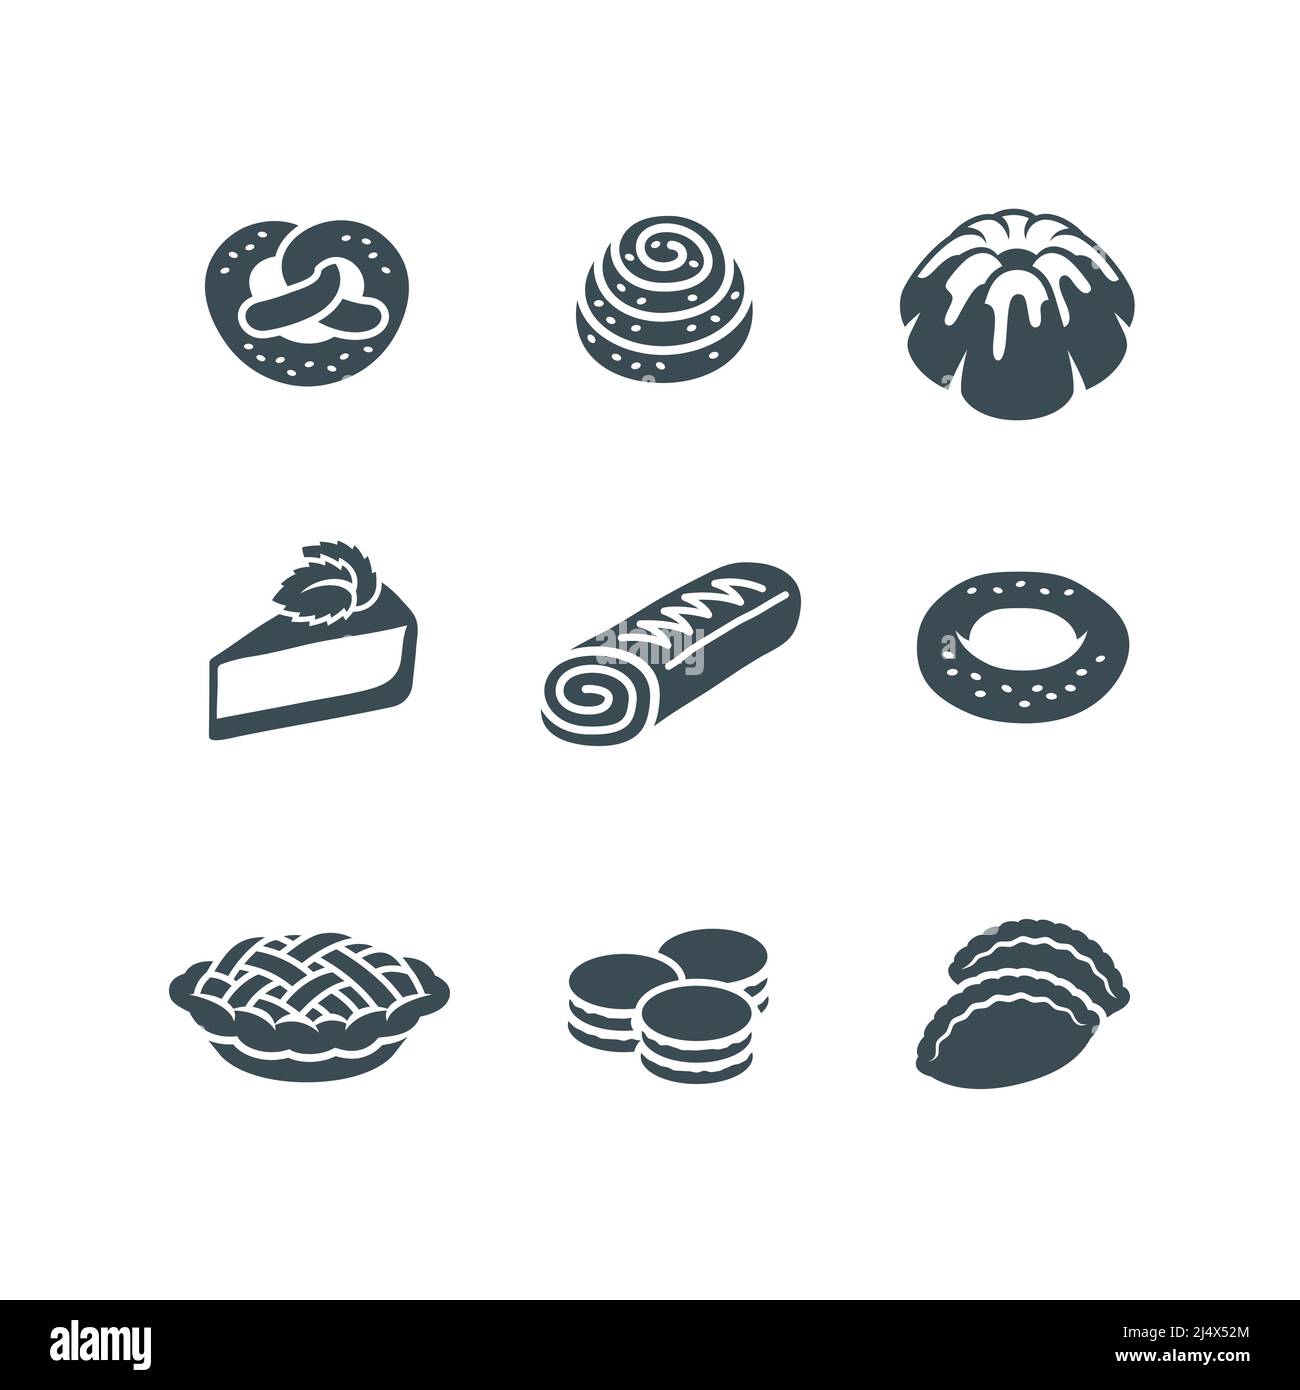 Sweet dessert food icons. Different pastry items pictograms. Simple monochrome silhouette of apple pie, bundt cake, cinnamon bun, pretzel, cheesecake, Stock Vector